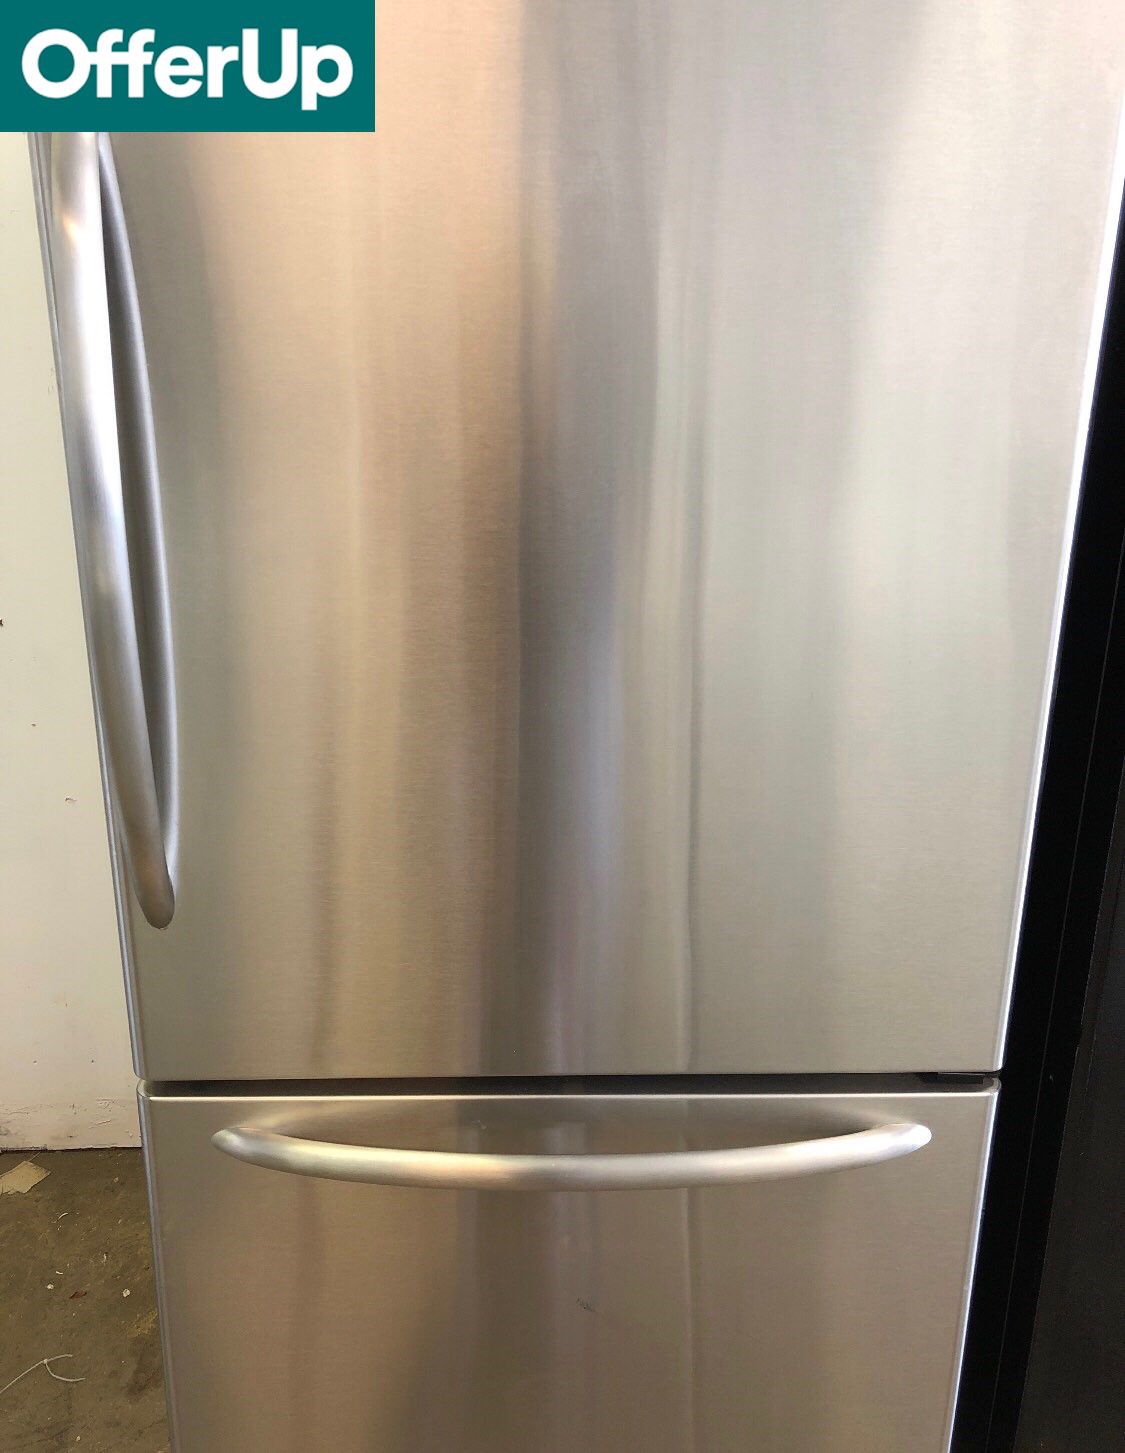 ON SALE! Maytag Refrigerator Fridge Bottom Freezer With Icemaker #734